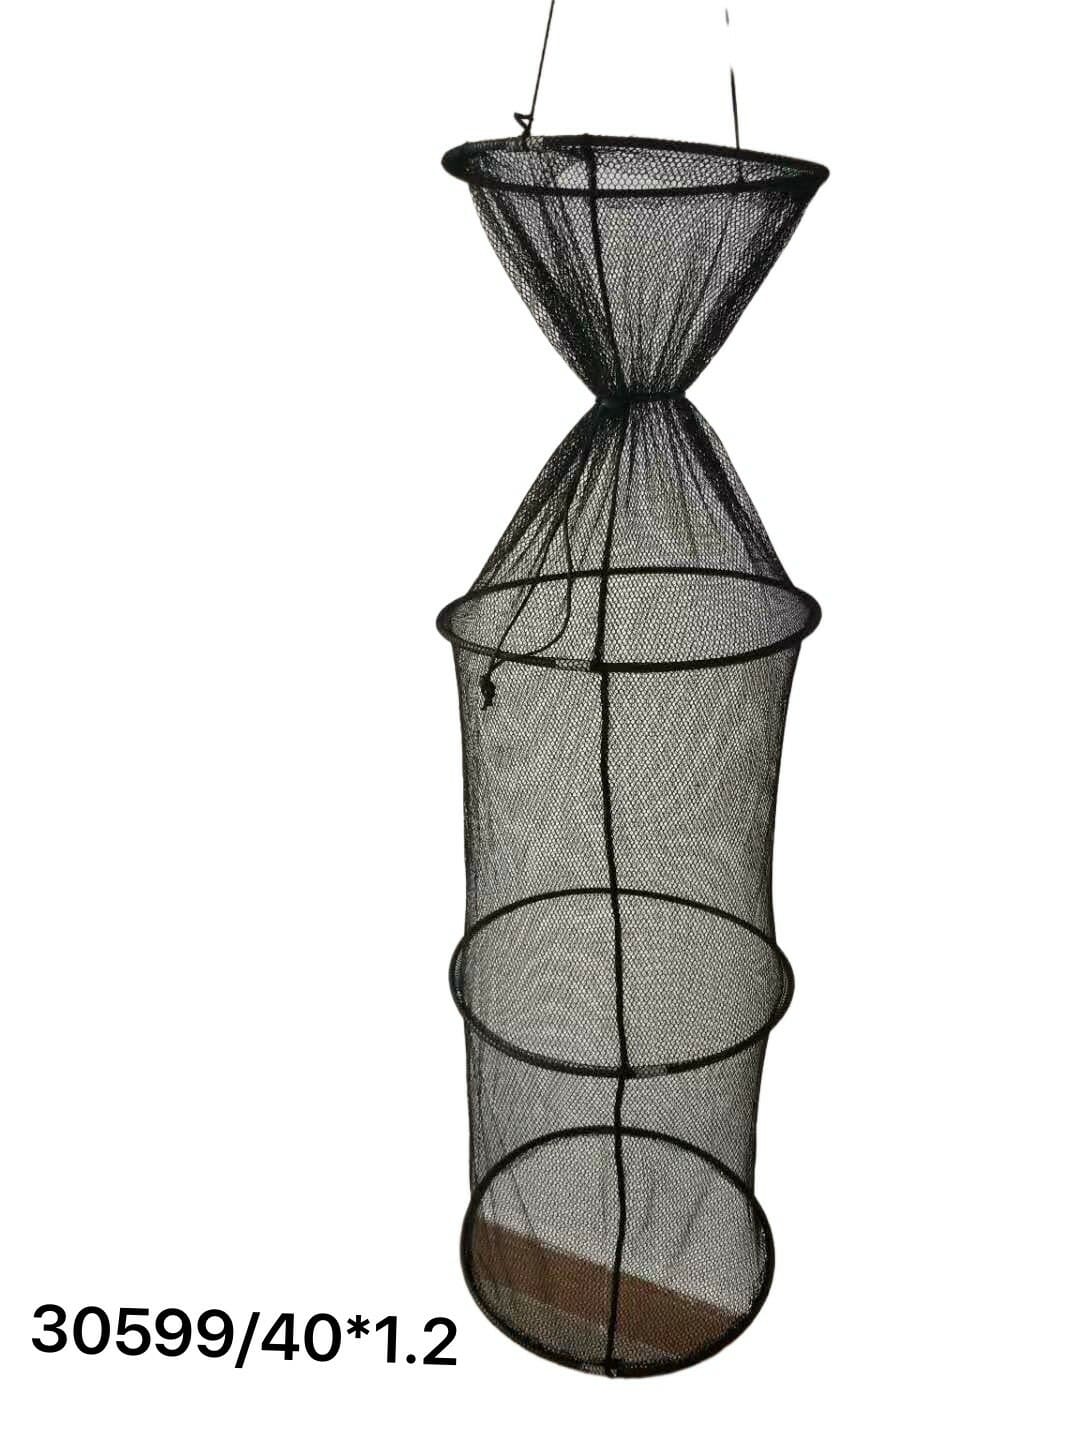 Collapsible fish storage basket - Net - 40x120cm - 30599